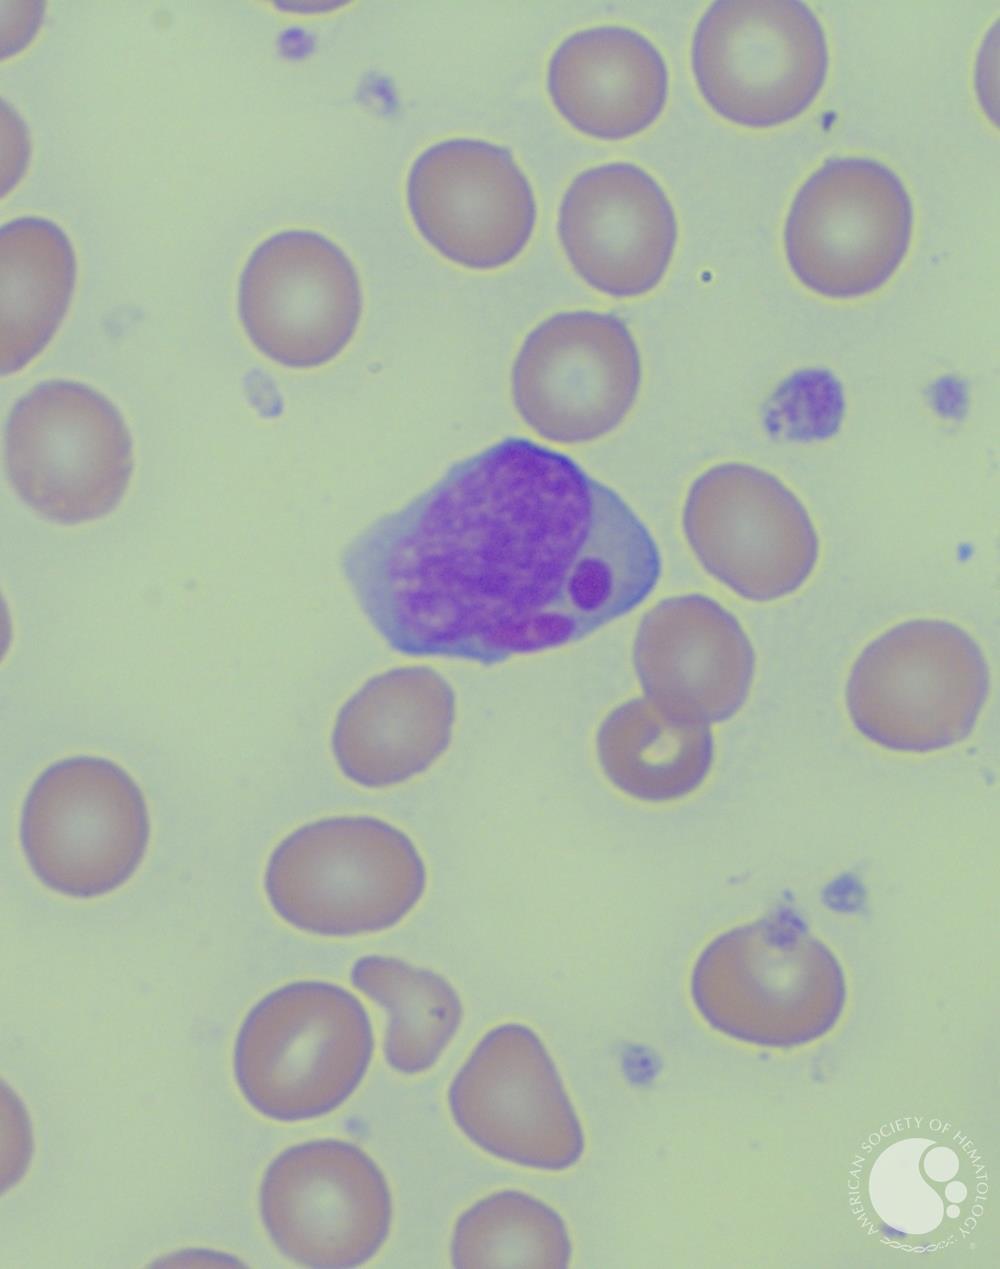 T-LGL leukemia - Peripheral smear - Figure 2